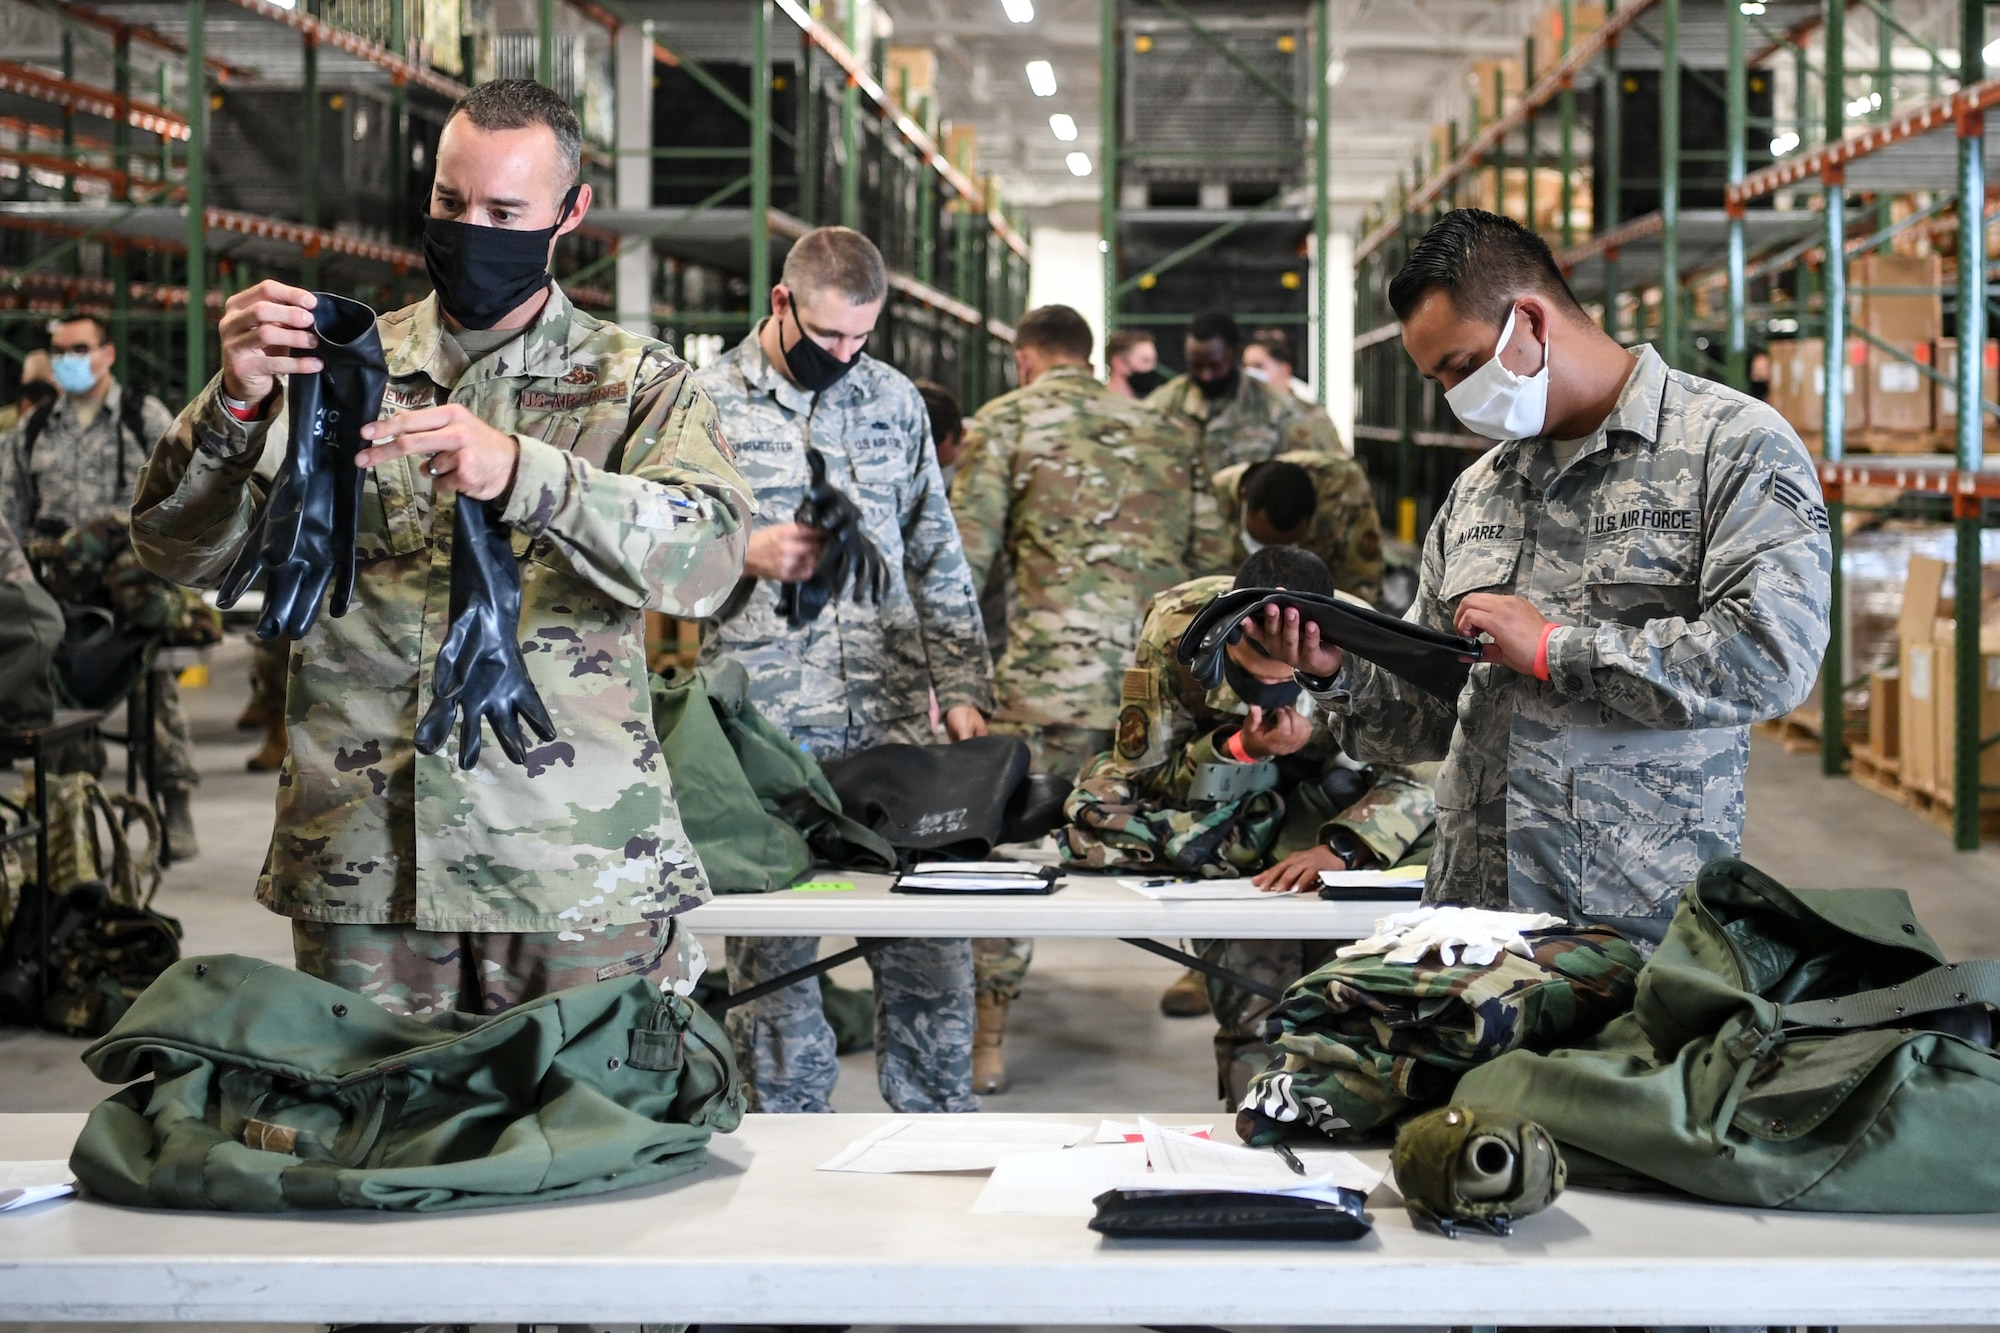 Dozens of Airmen check their deployment gear on tables.